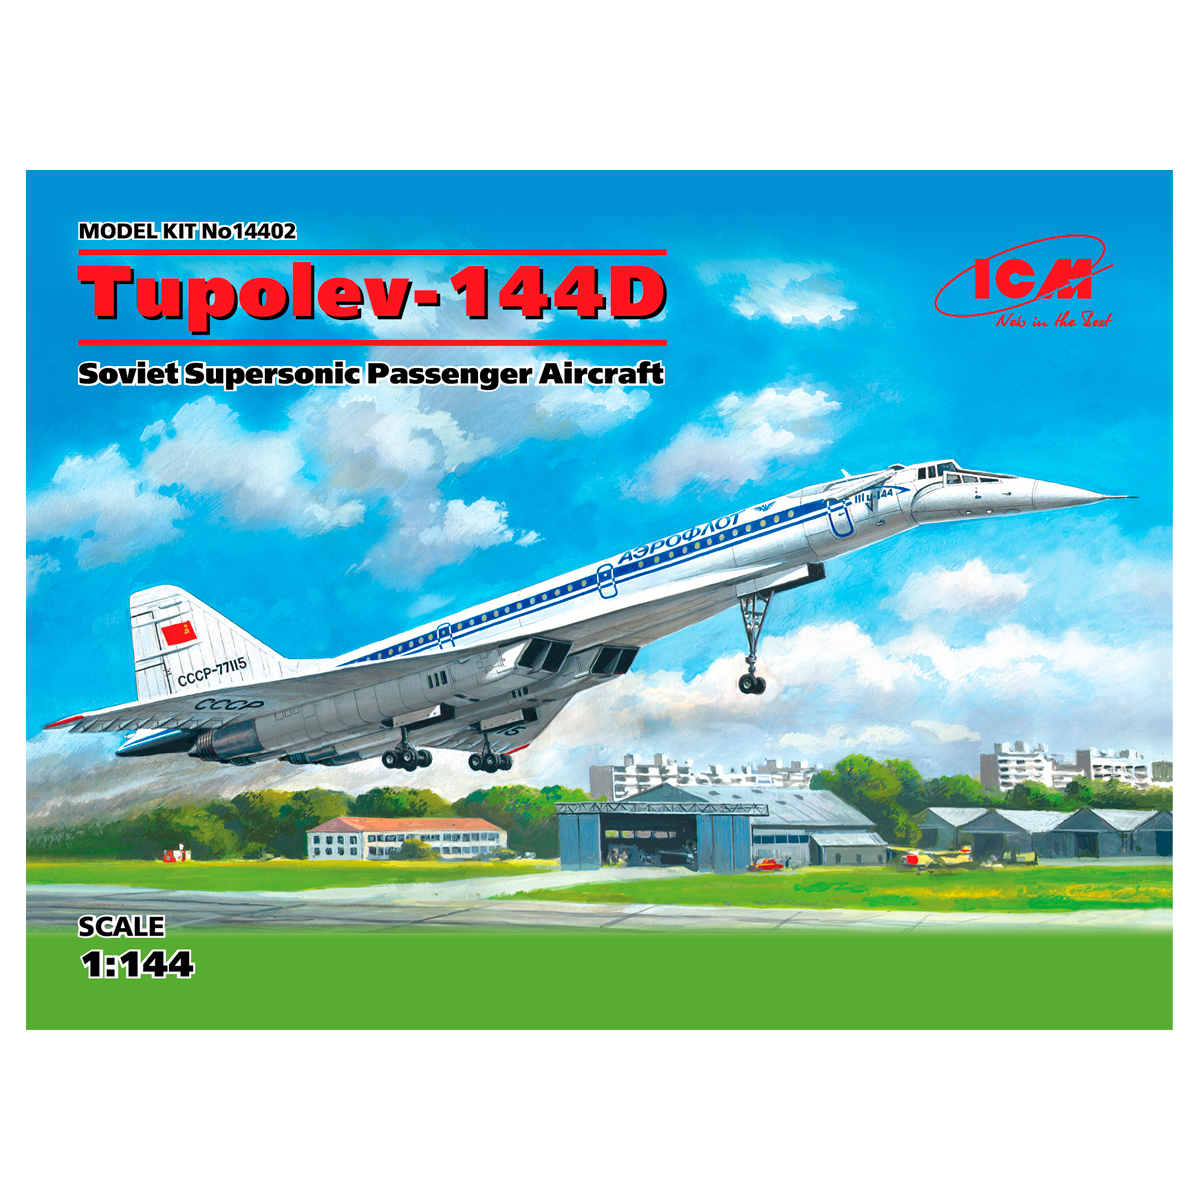 Tupolev-144D, Soviet Supersonic Passenger Aircraft 1/144